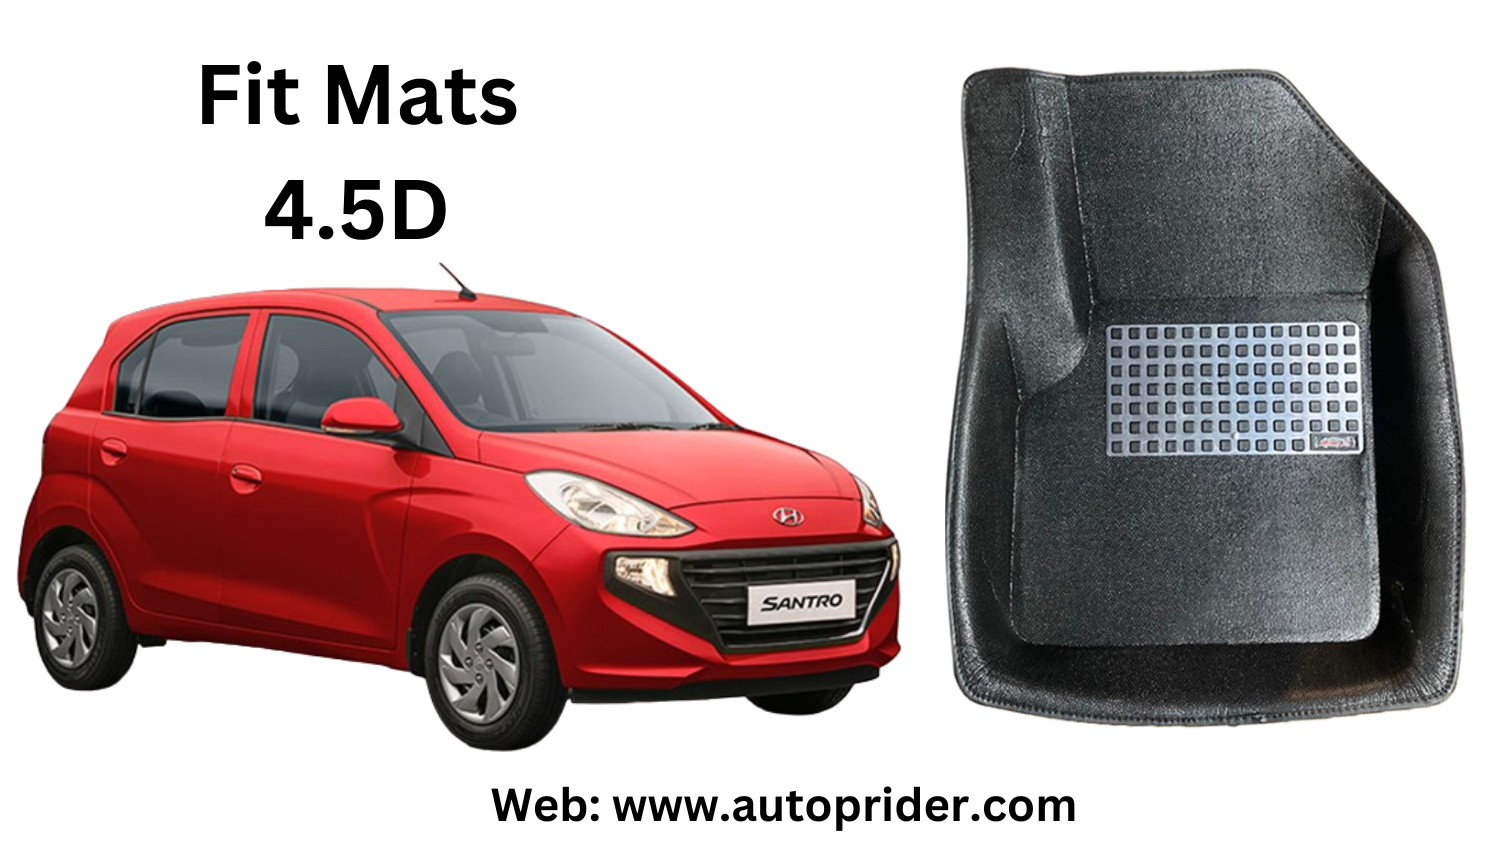 Autoprider | Fit Mats 4.5D Economy Car Mats for Hyundai N-Santro